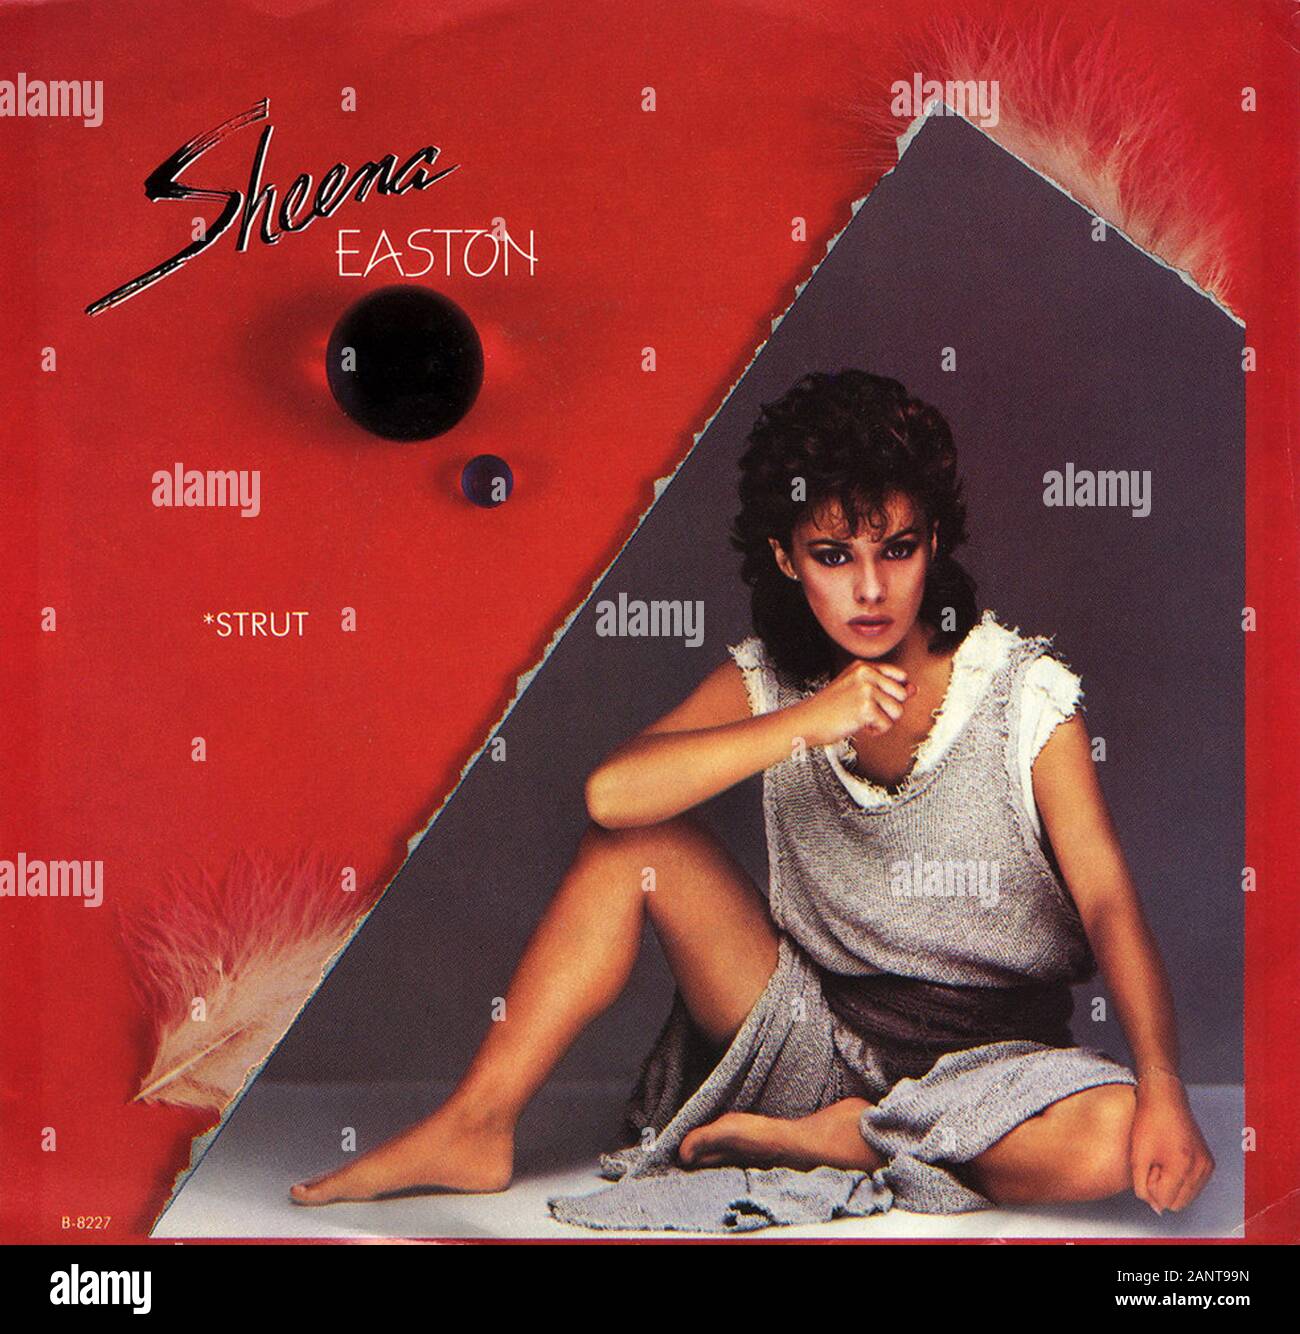 Sheena Easton - Strut - Classic vintage vinyl album Stock Photo